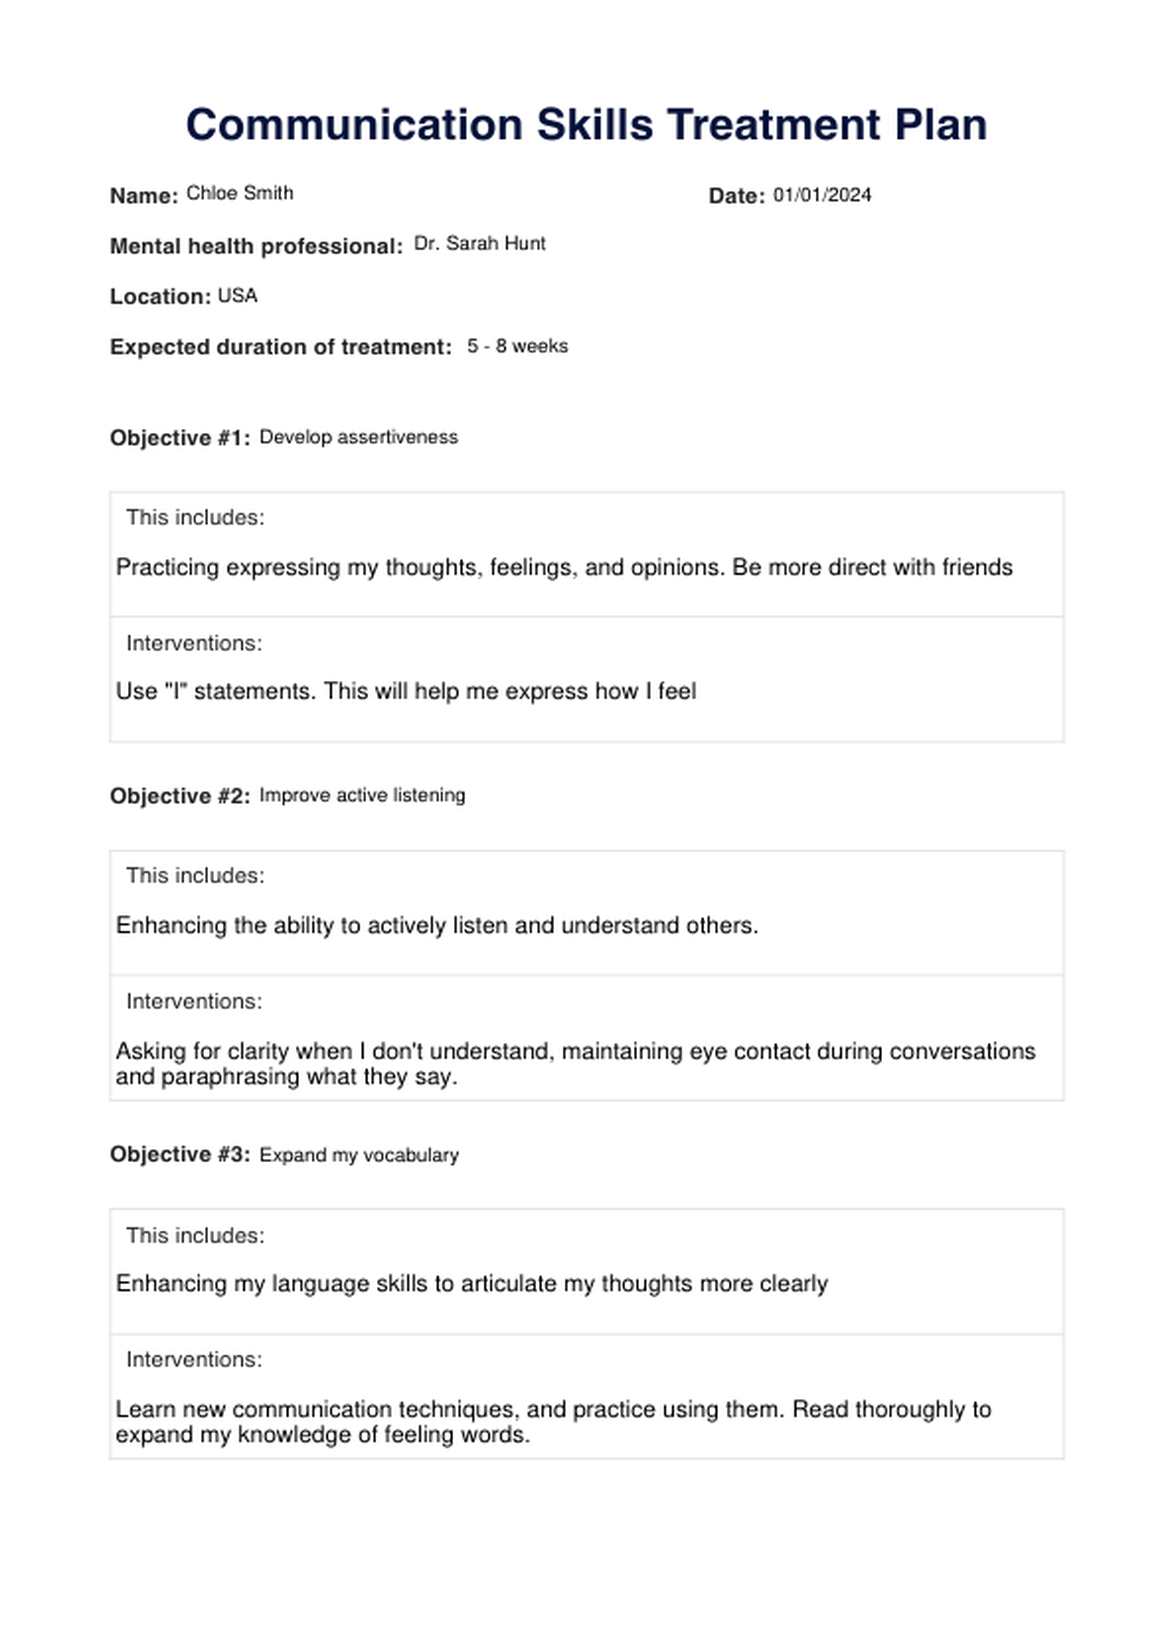 Communication Skills Treatment Plan PDF Example